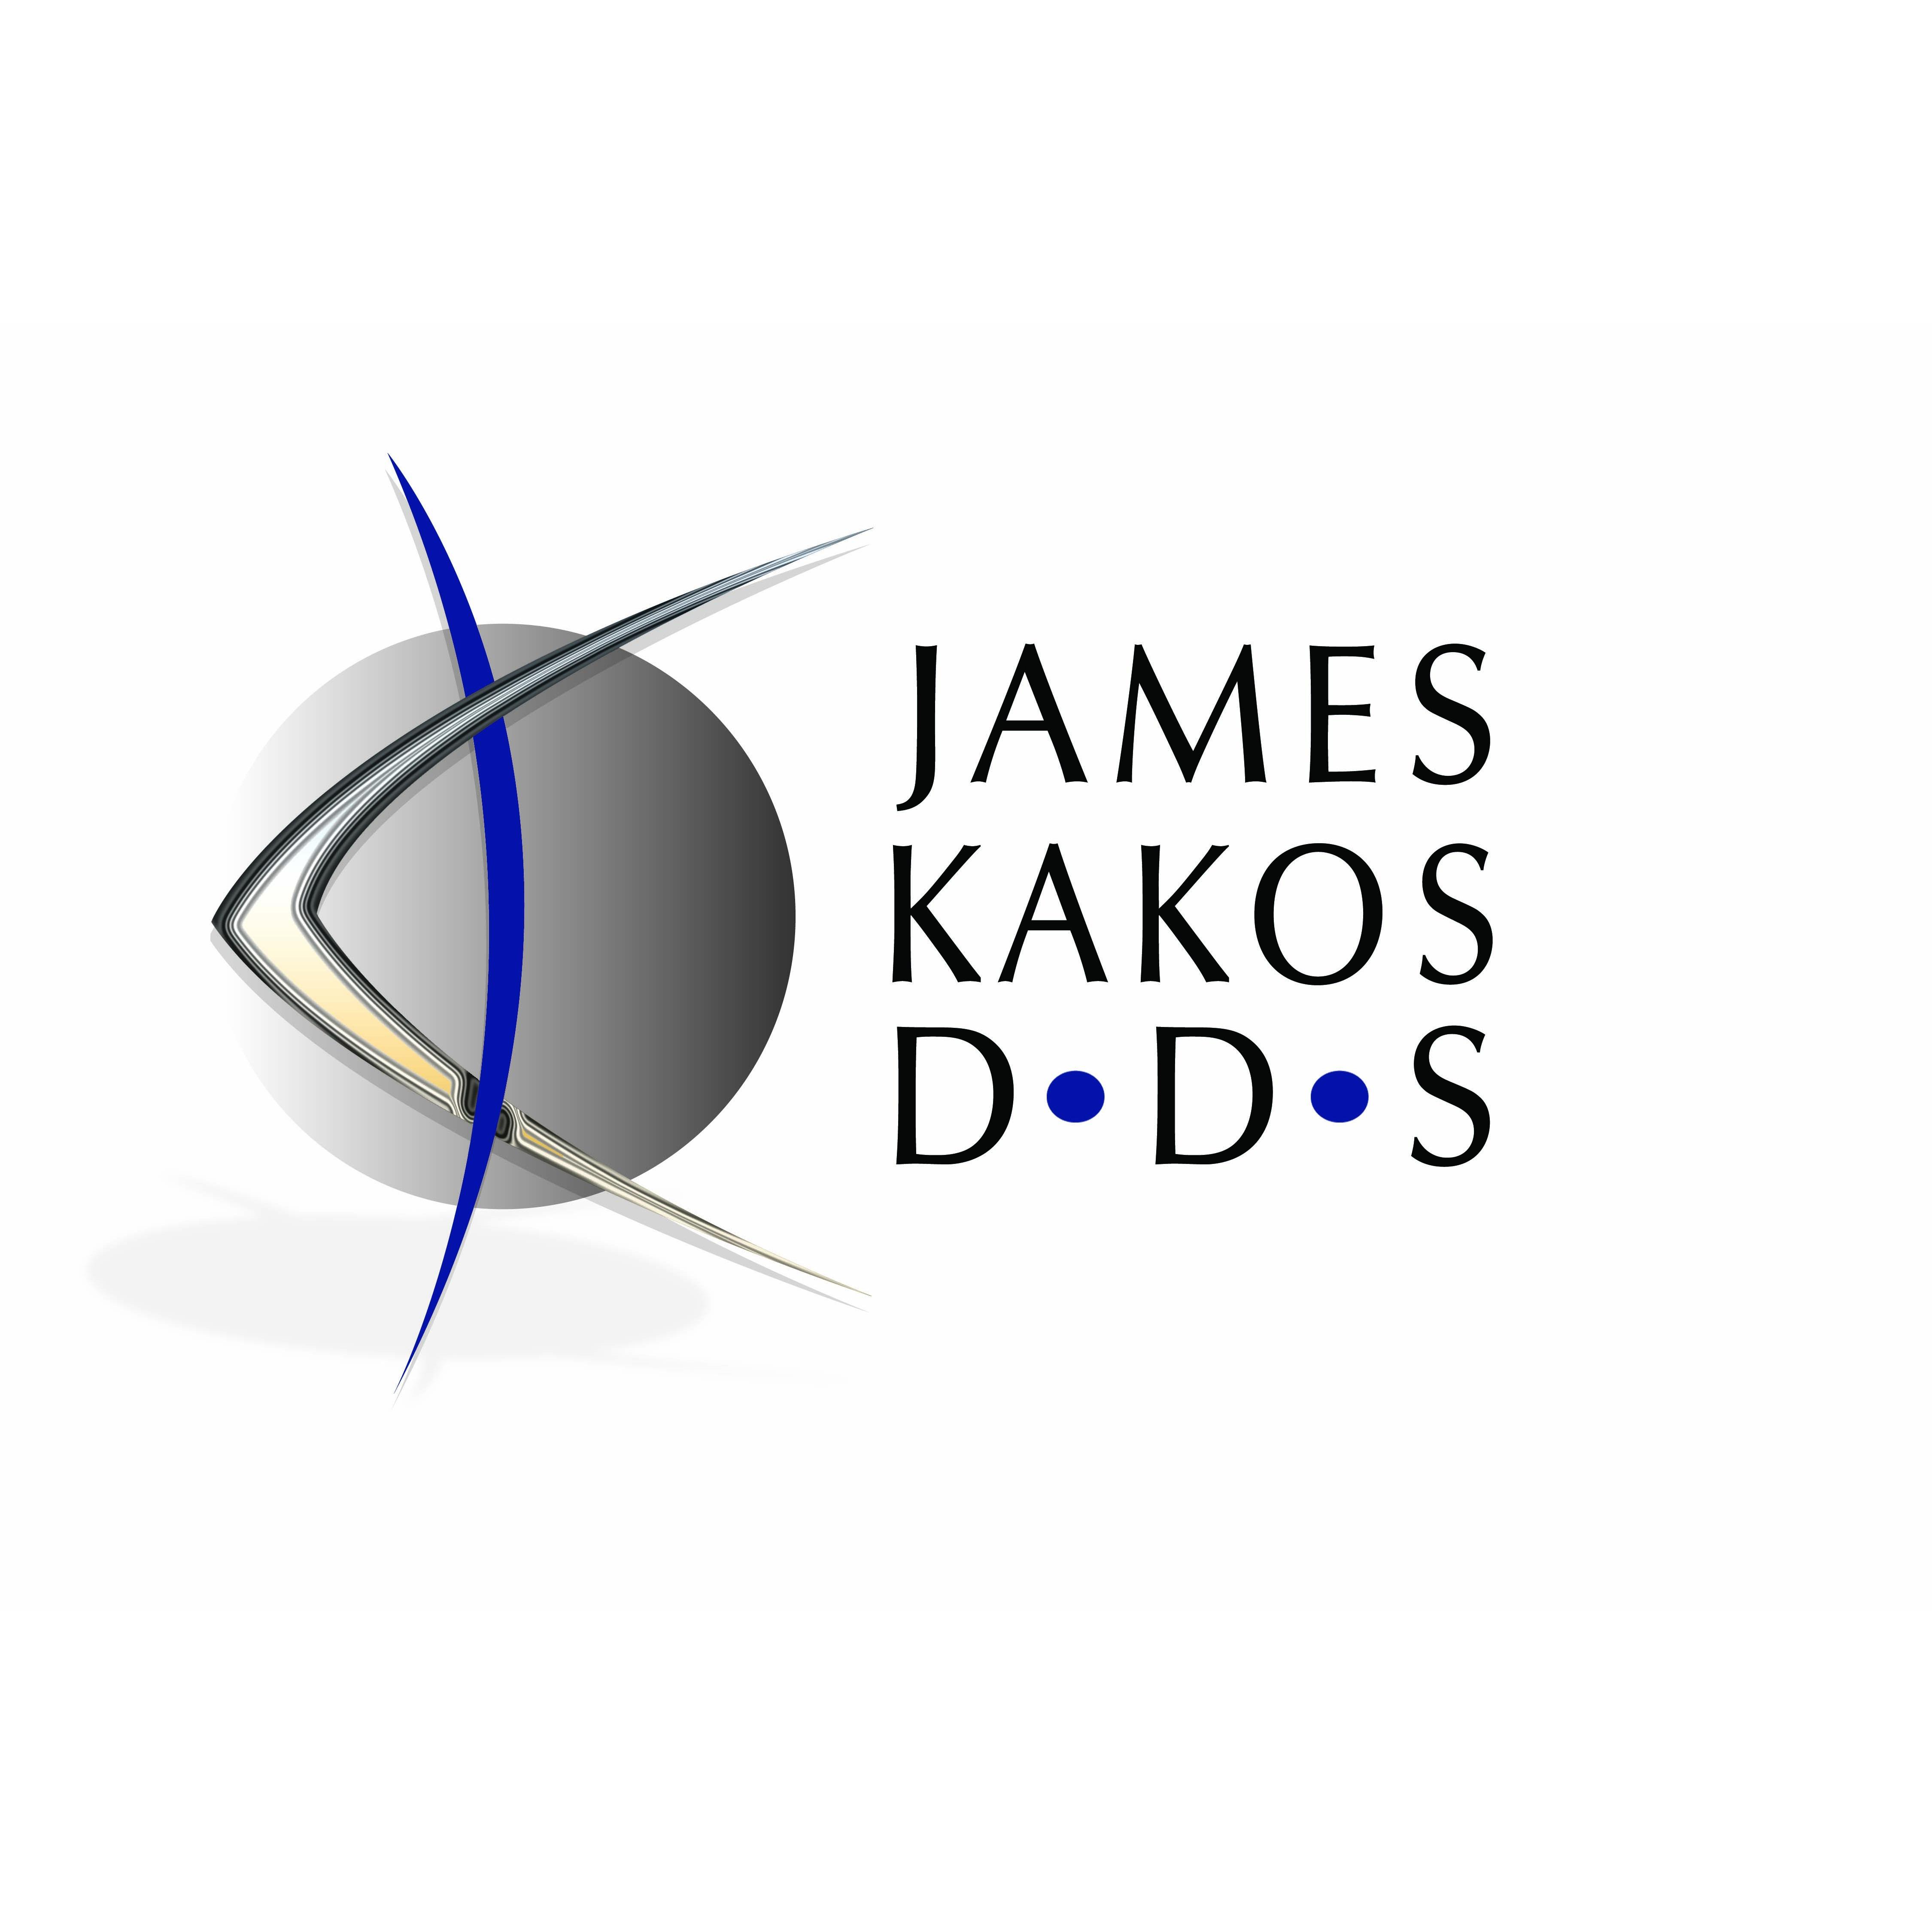 James Kakos DDS